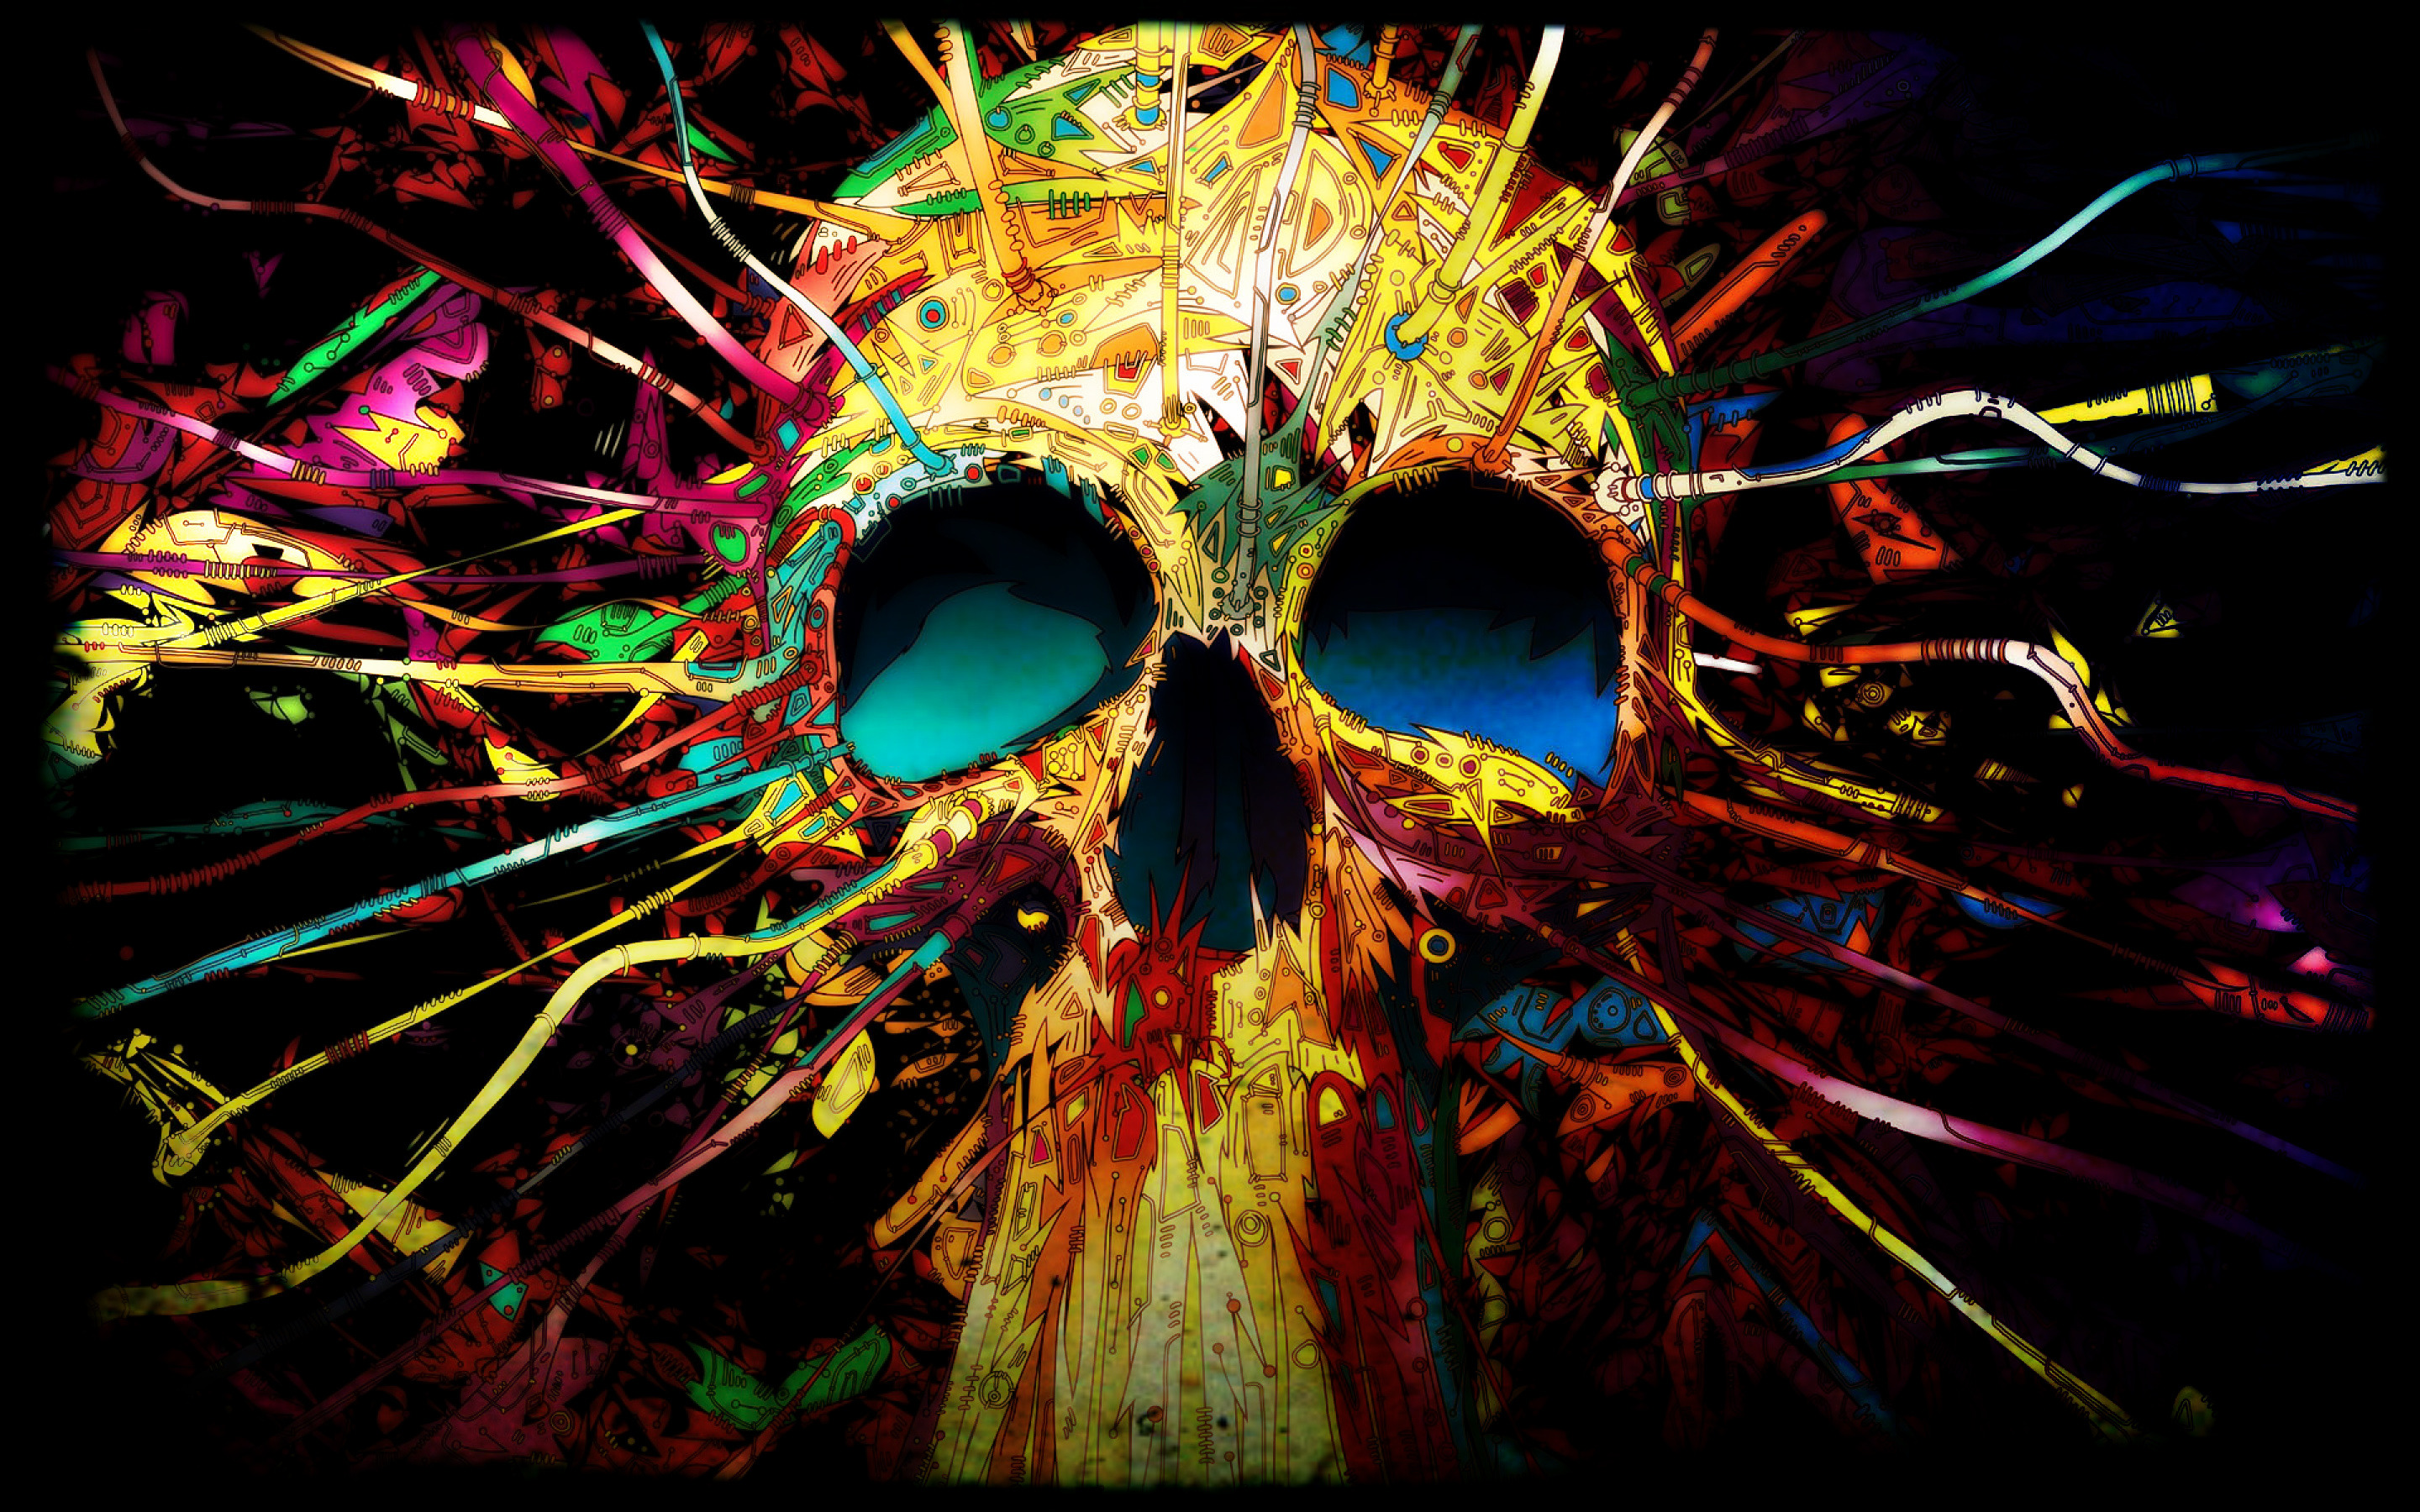 Colorful Skull Art Wallpapers